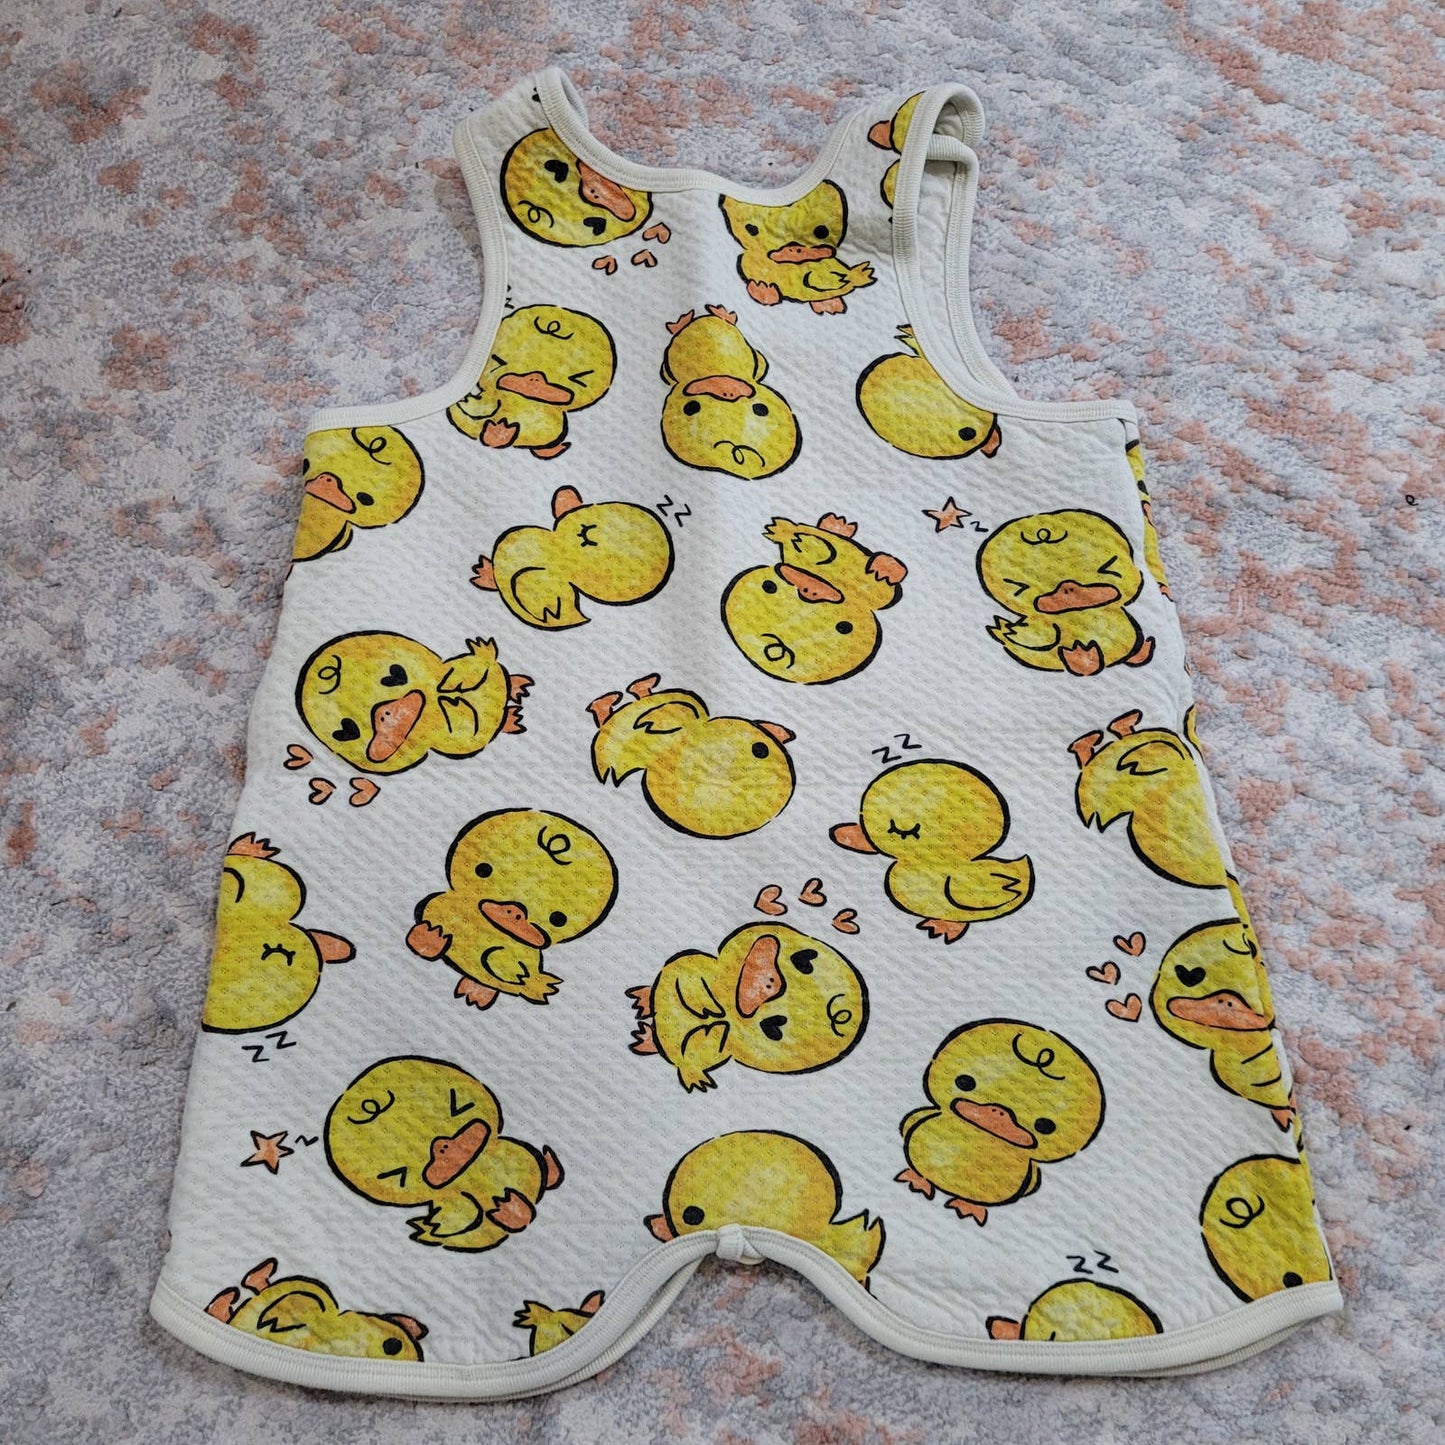 Mellisse Super Comfy Baby Duck Romper - Size 5